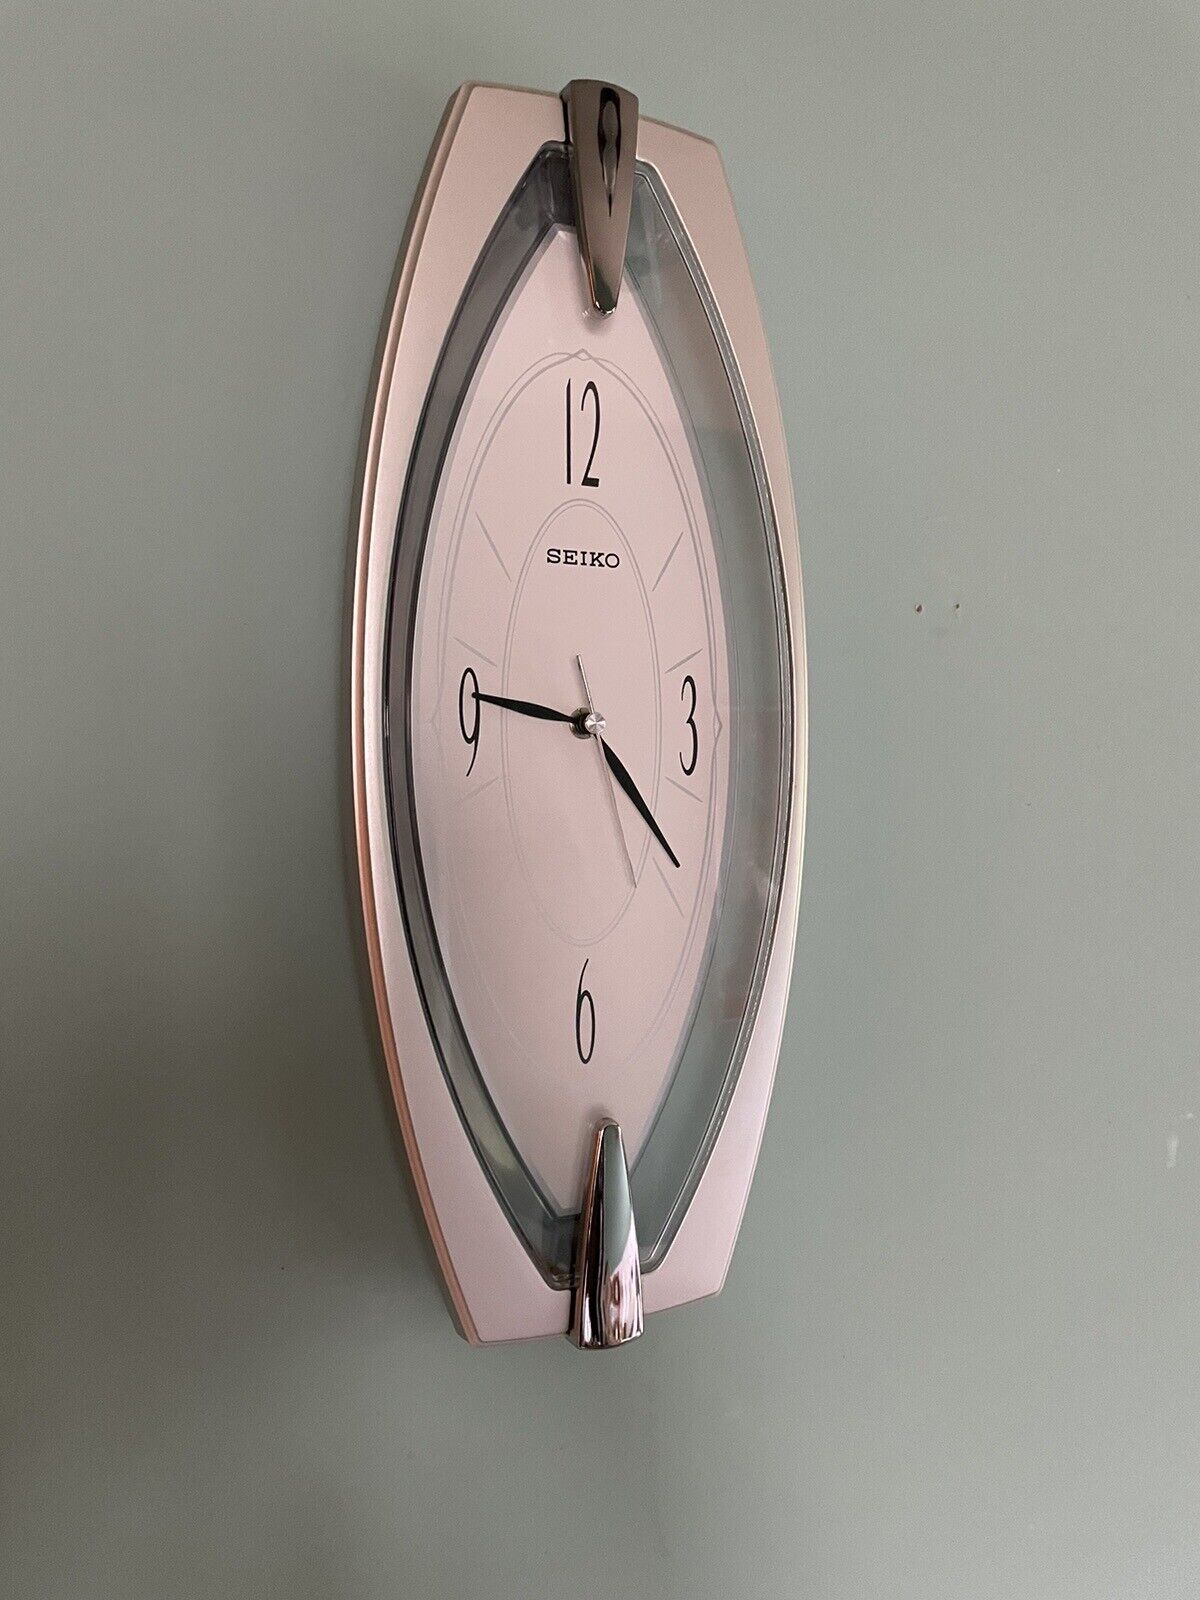 vintage seiko quartz wall clock